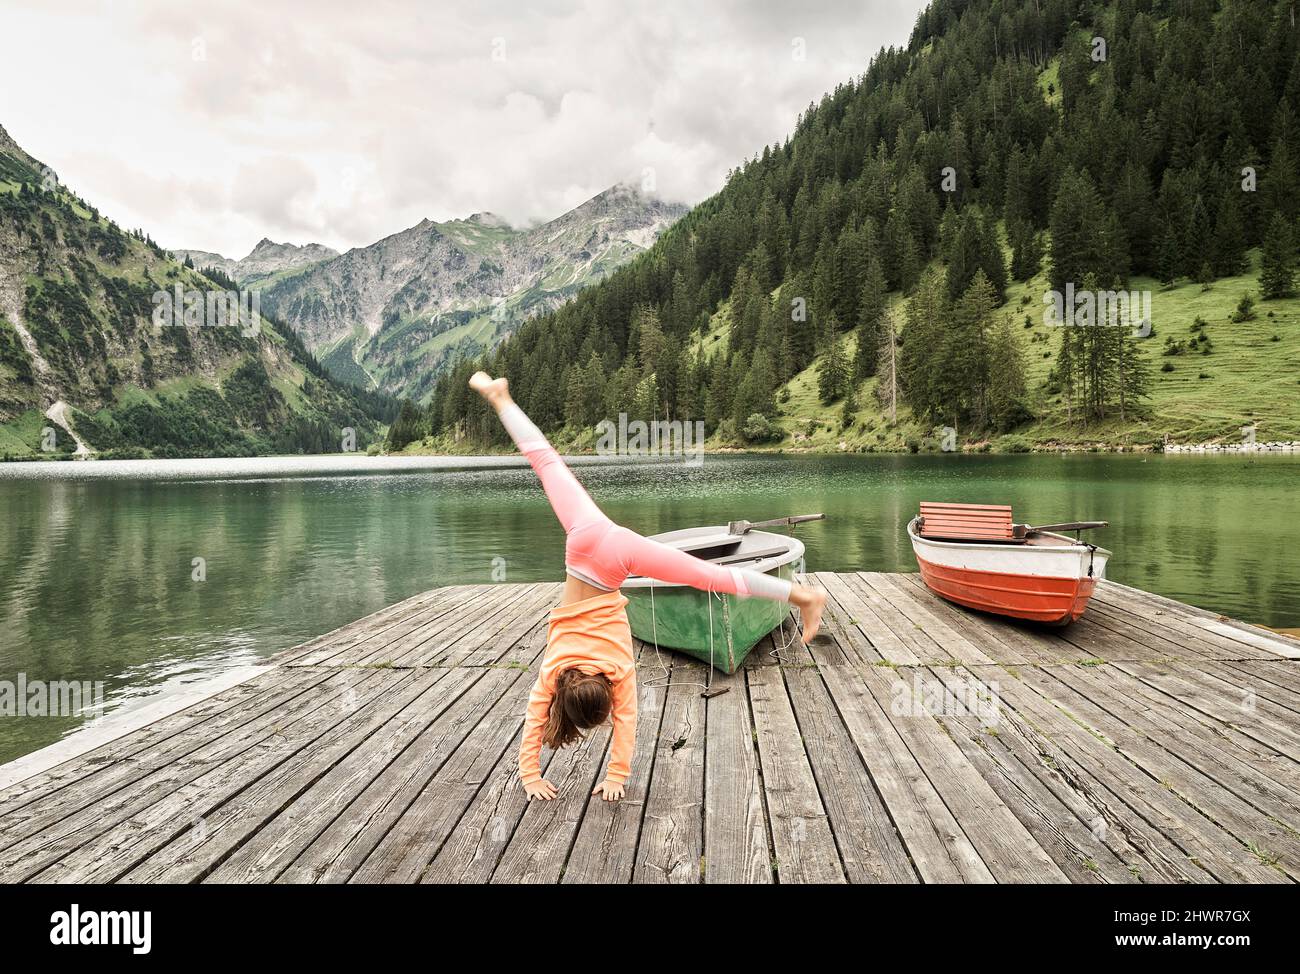 Girl doing cartwheel on jetty by lake Stock Photo